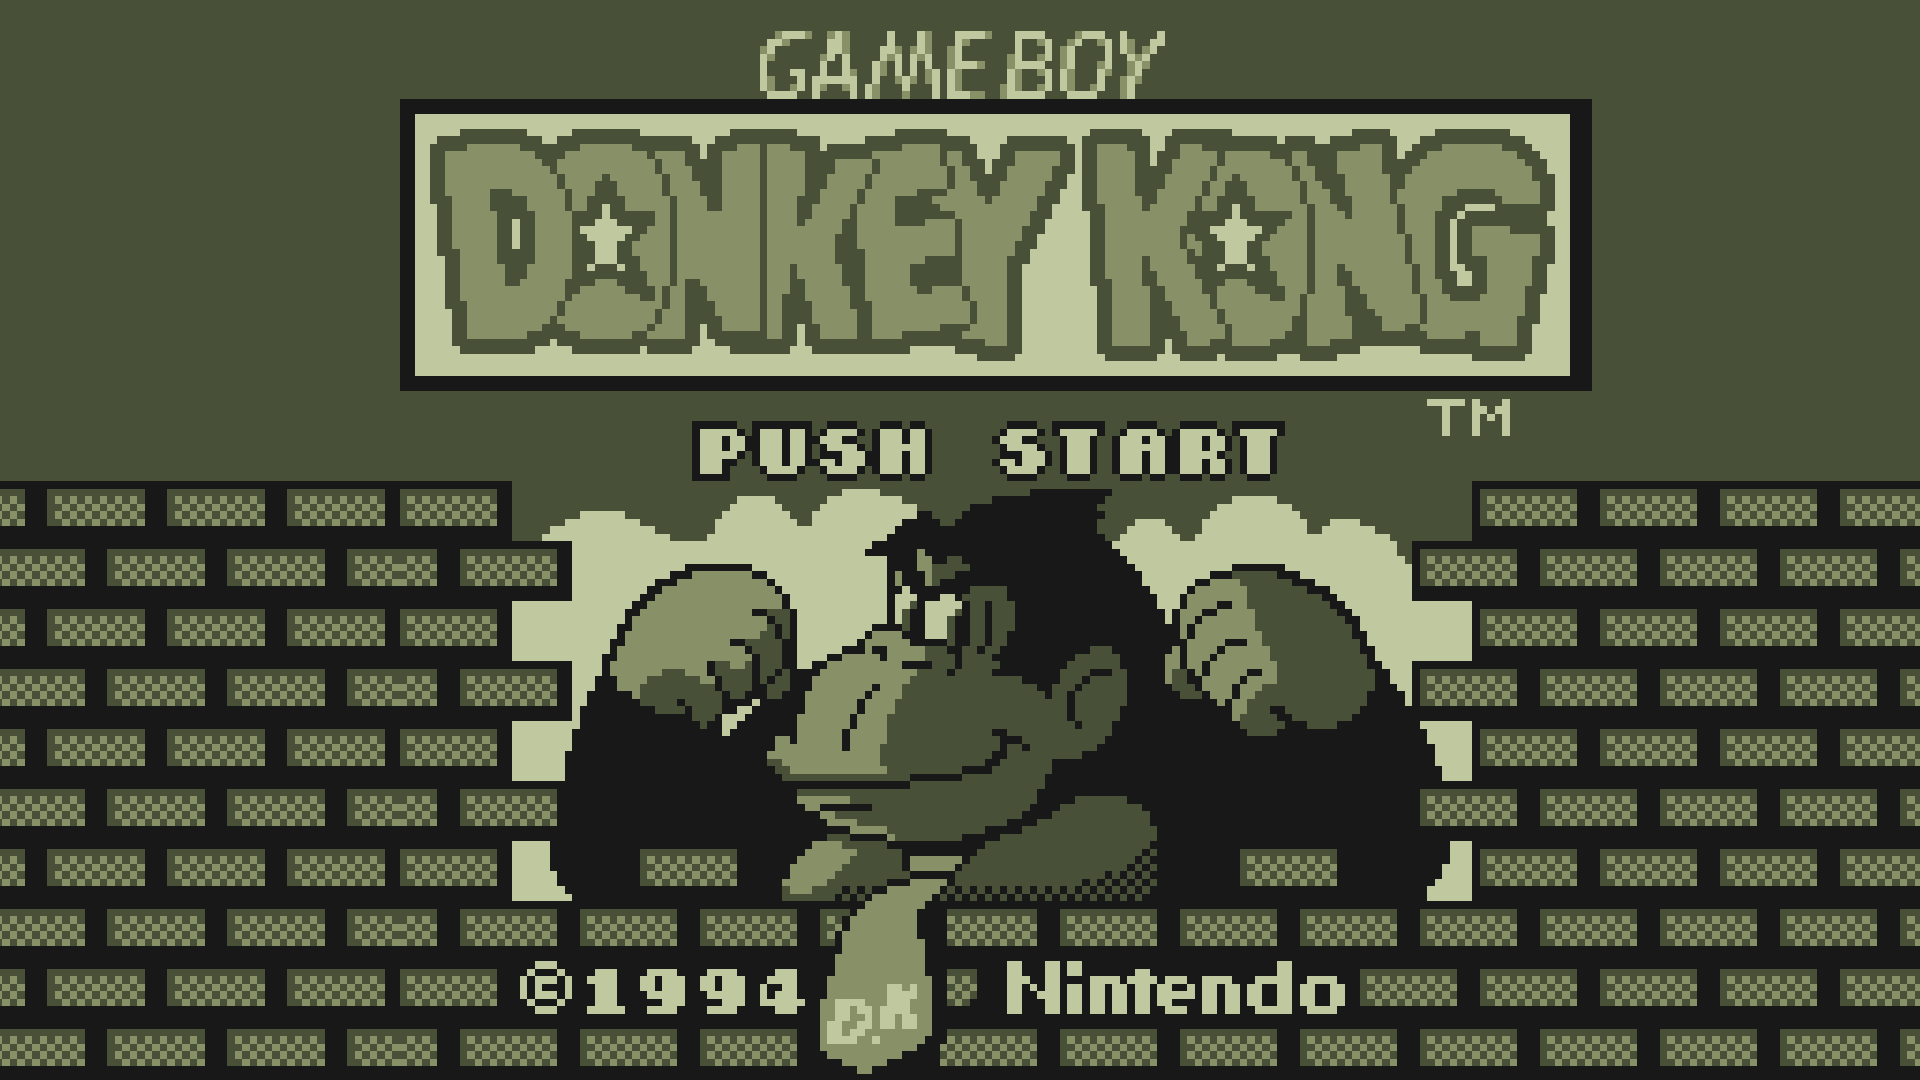 Nintendo, video games, Gameboy, Donkey Kong, retro games - desktop wallpaper